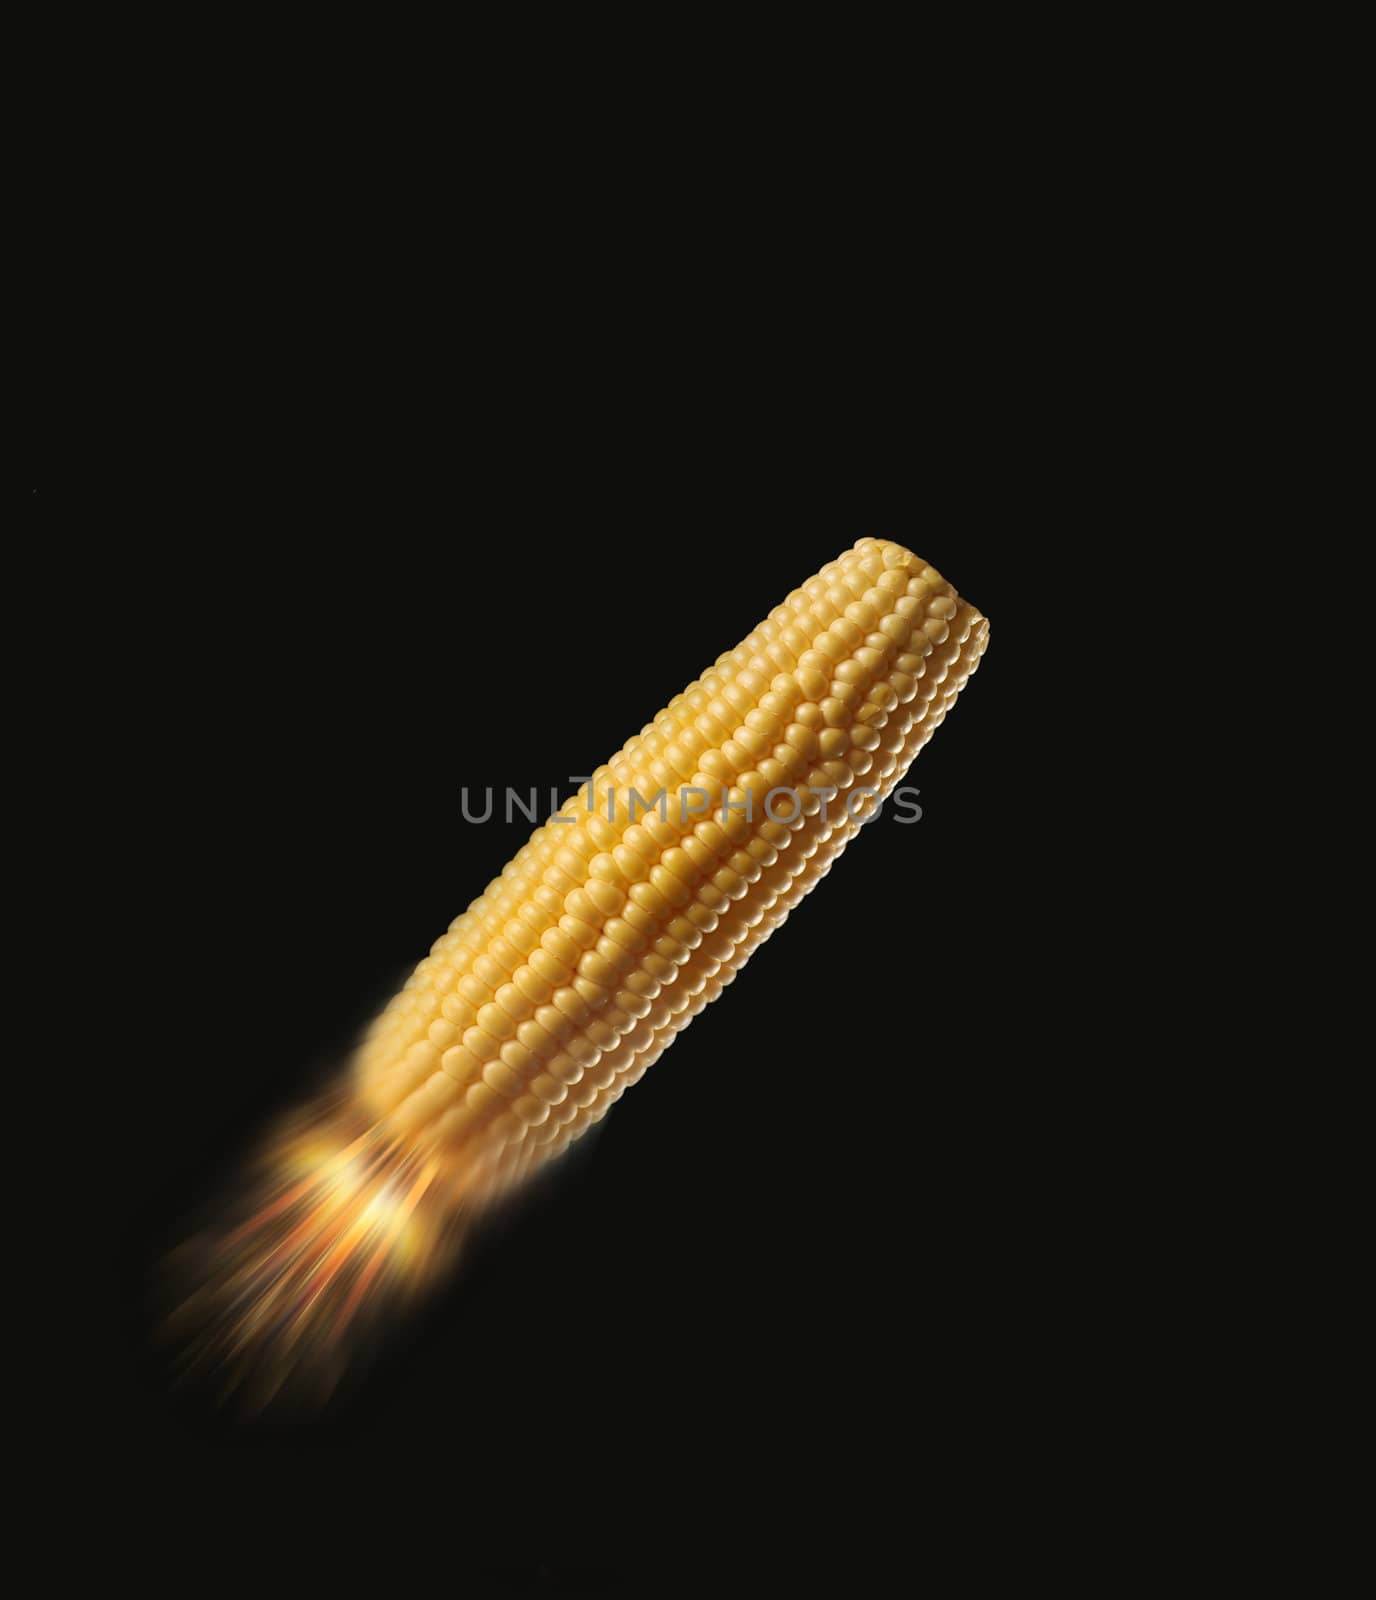 Bio Fuel Corn Cob Rocket, Flying with Fireworks, Studio Isolated on Black Background